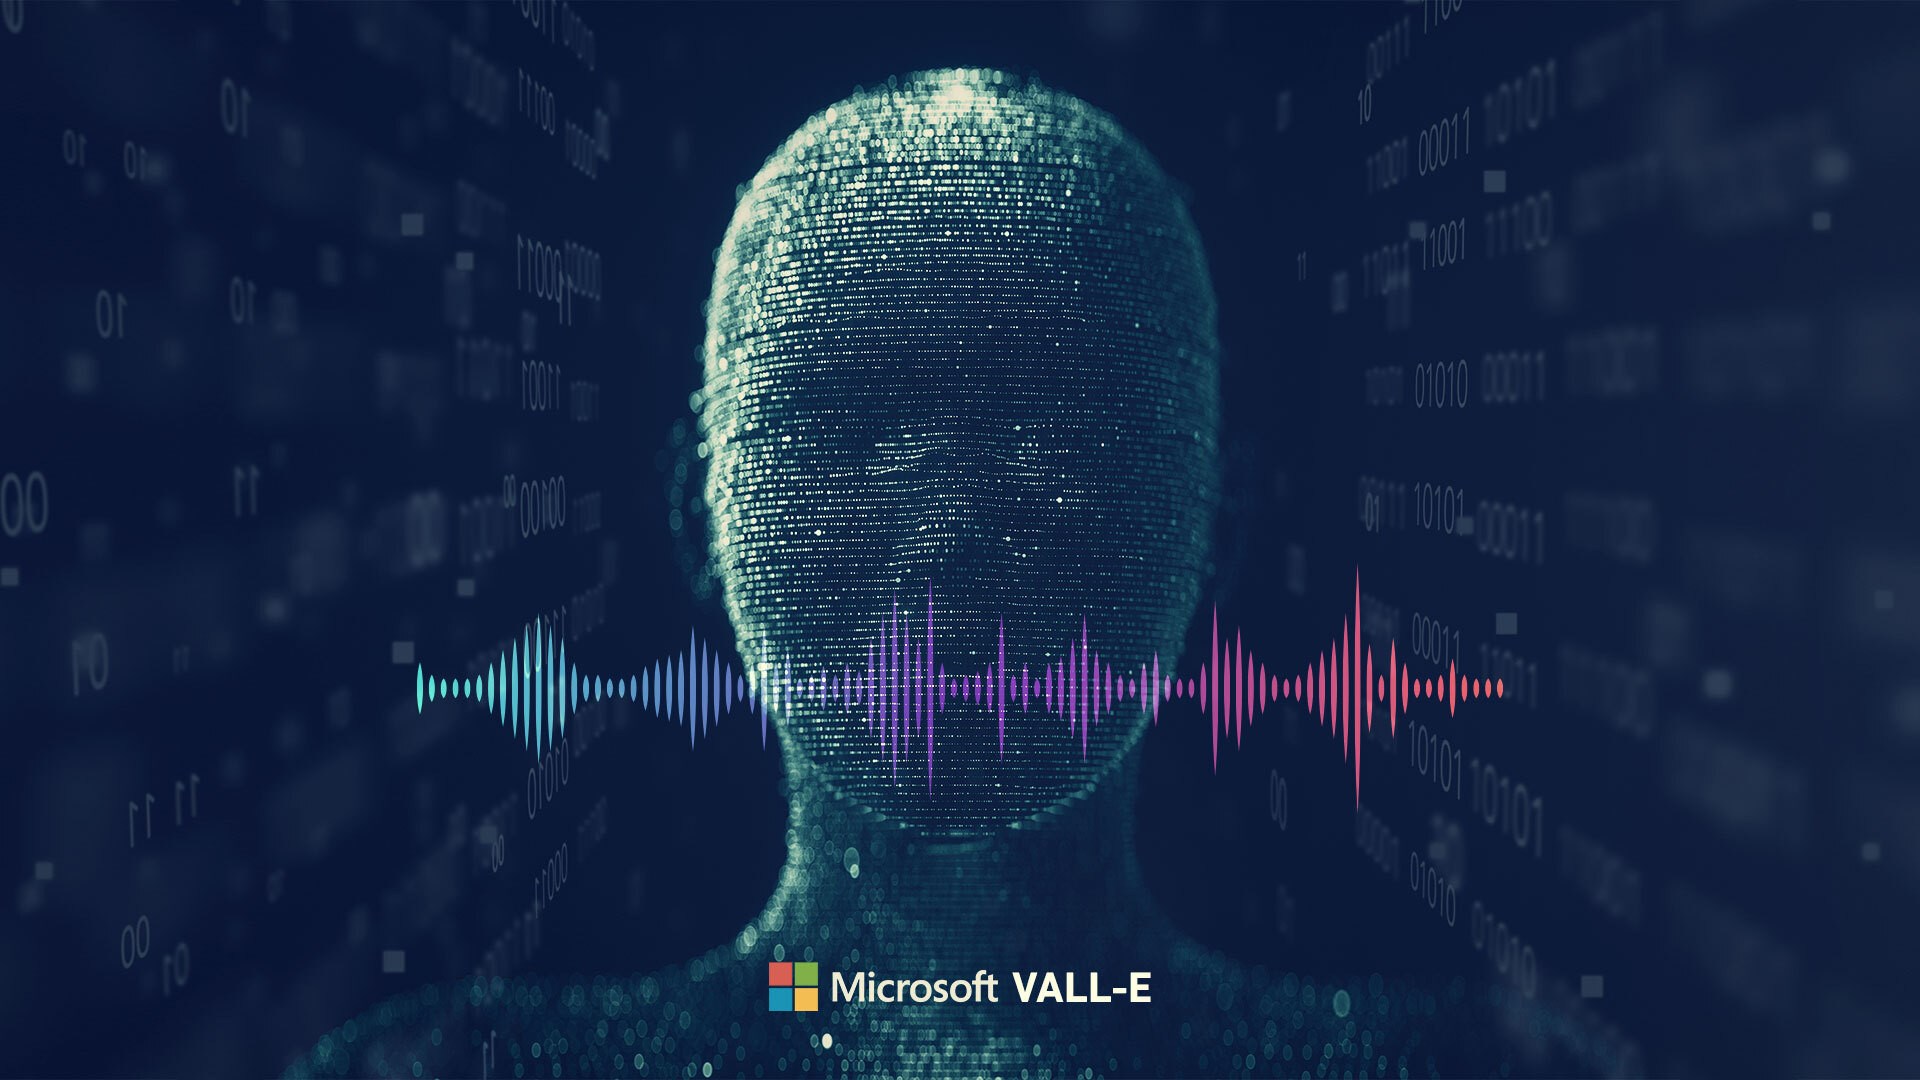 Microsoft VALL-E 2: Yapay zeka ses taklidi artık ayırt edilemez seviyede